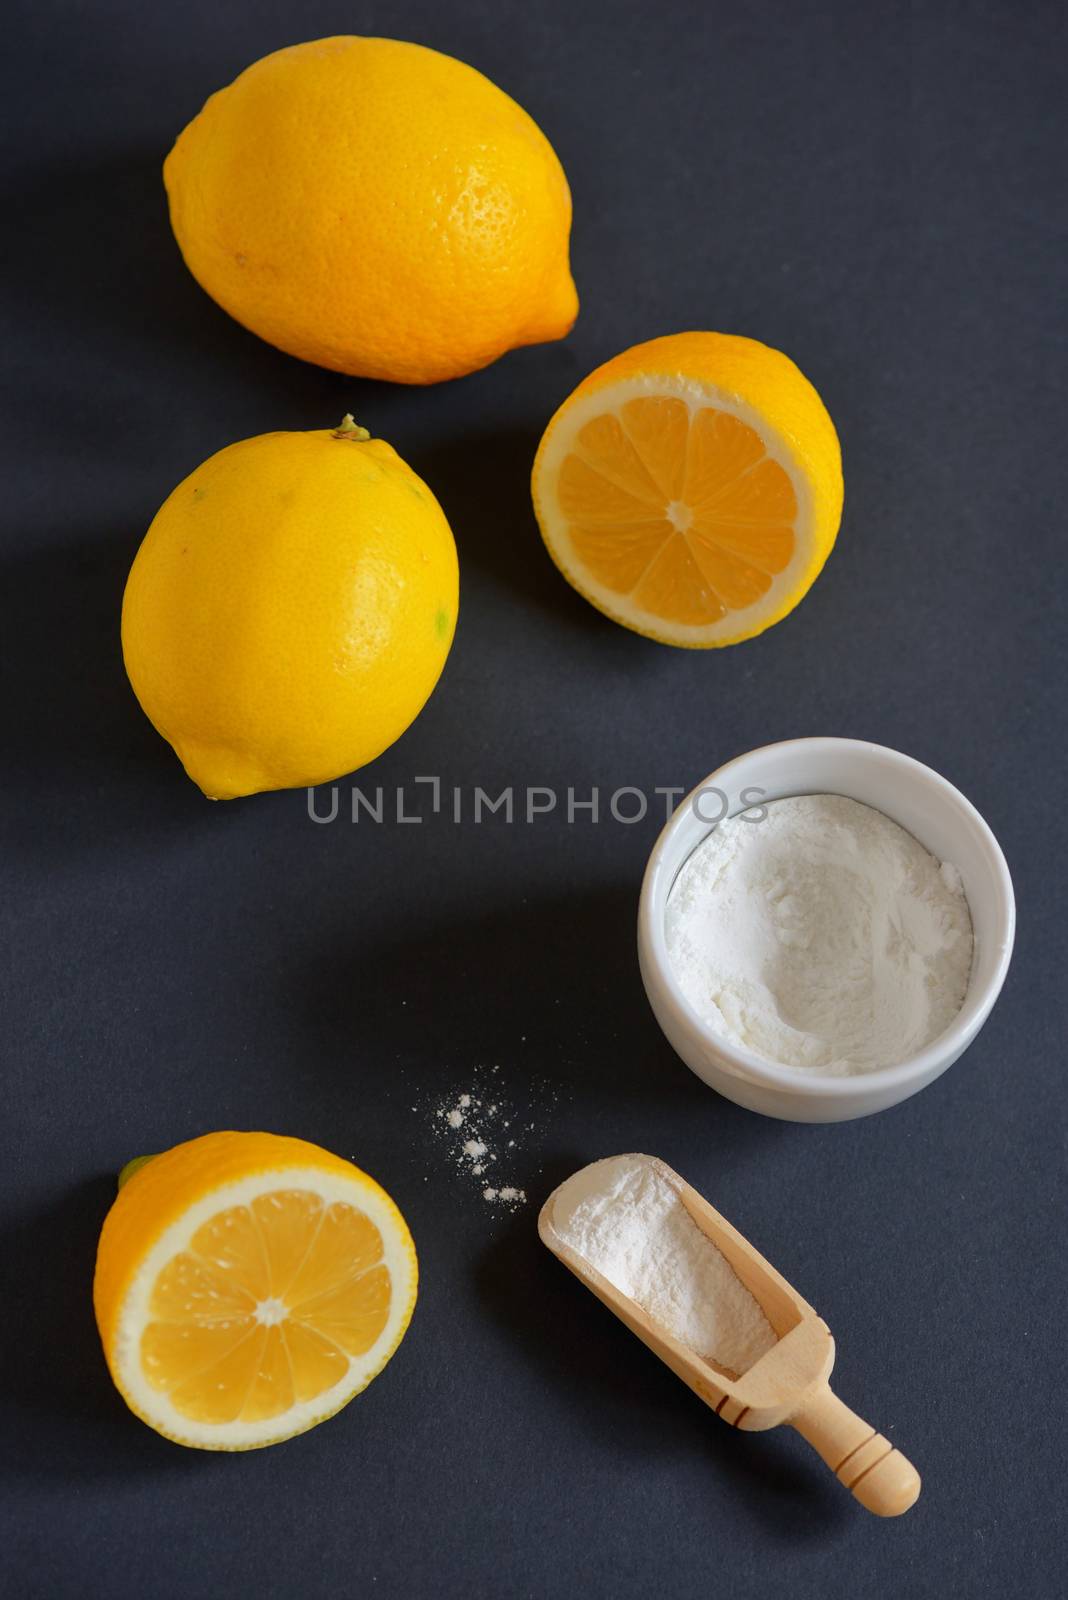 Lemon and baking soda  by mady70